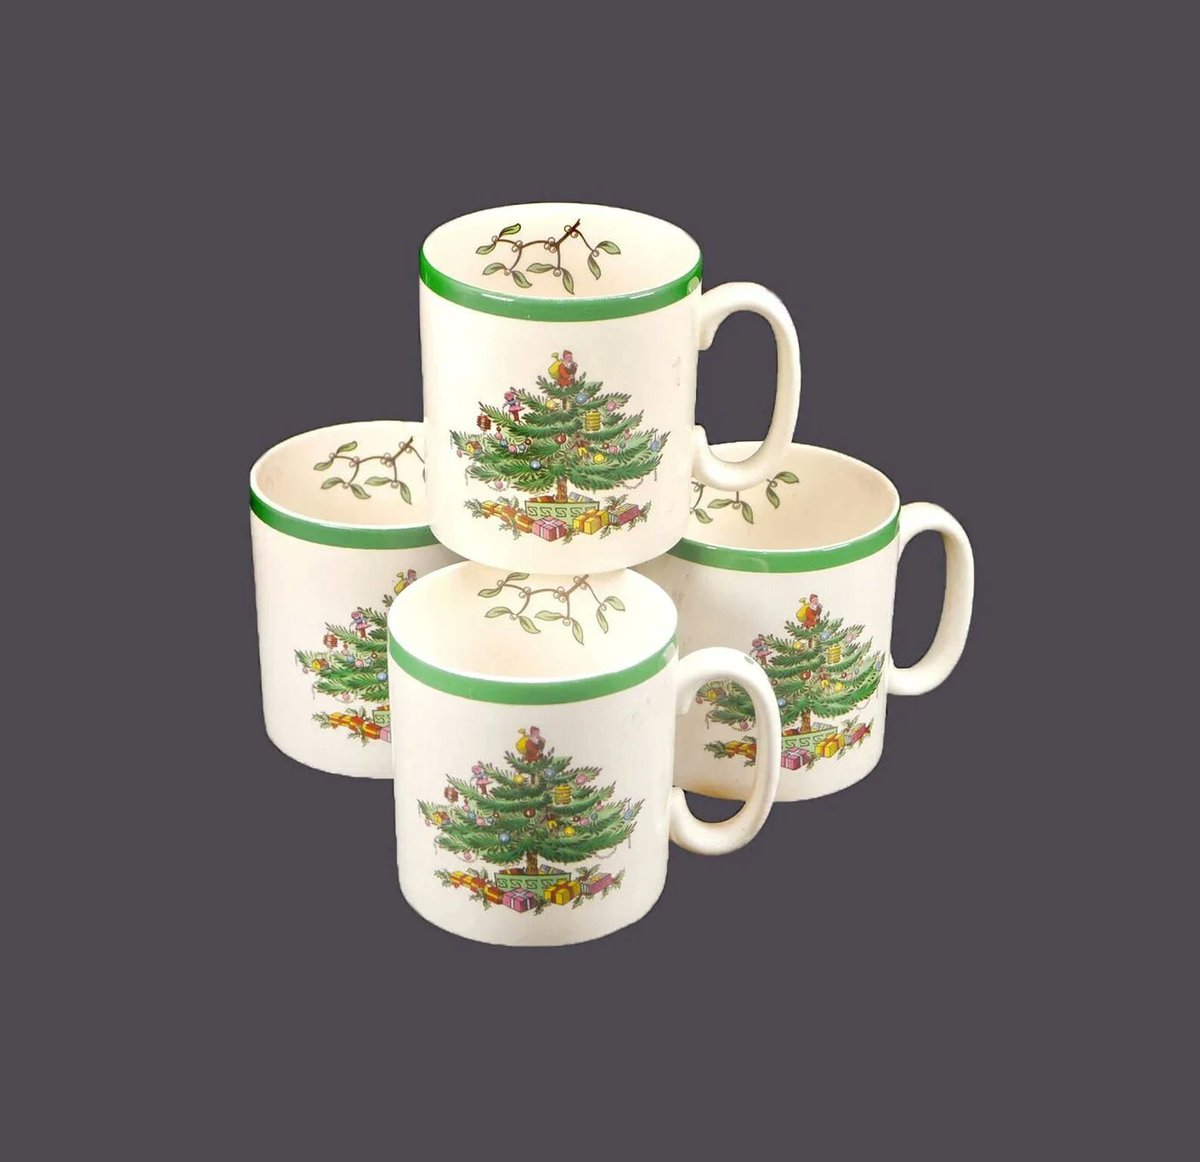 Four Spode Christmas Tree S3324 coffee or tea mugs made in England. etsy.me/44se7Ek via @Etsy #BuyfromGroovy #antiqueshop #tabledecor #tableware #dinnerware #Christmasdishes #Christmas #Spode #SpodeChristmas #Christmascoffee #Christmastea #EtsySellers